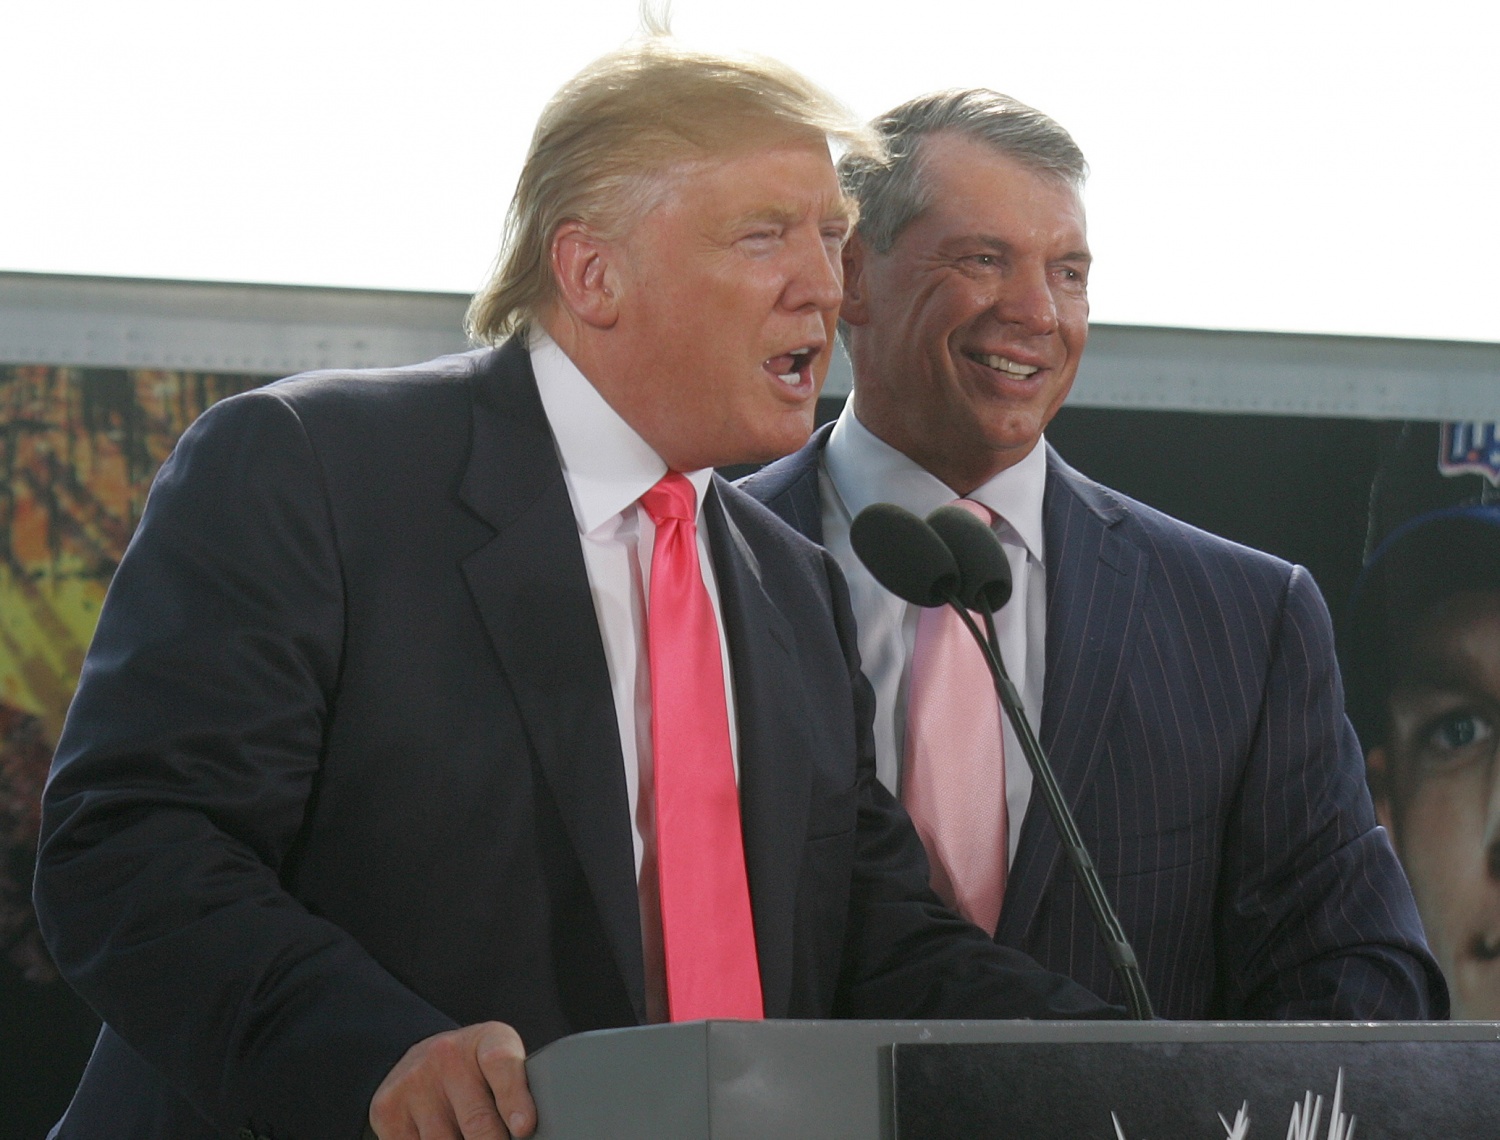 Vince McMahon (L) and Donald Trump